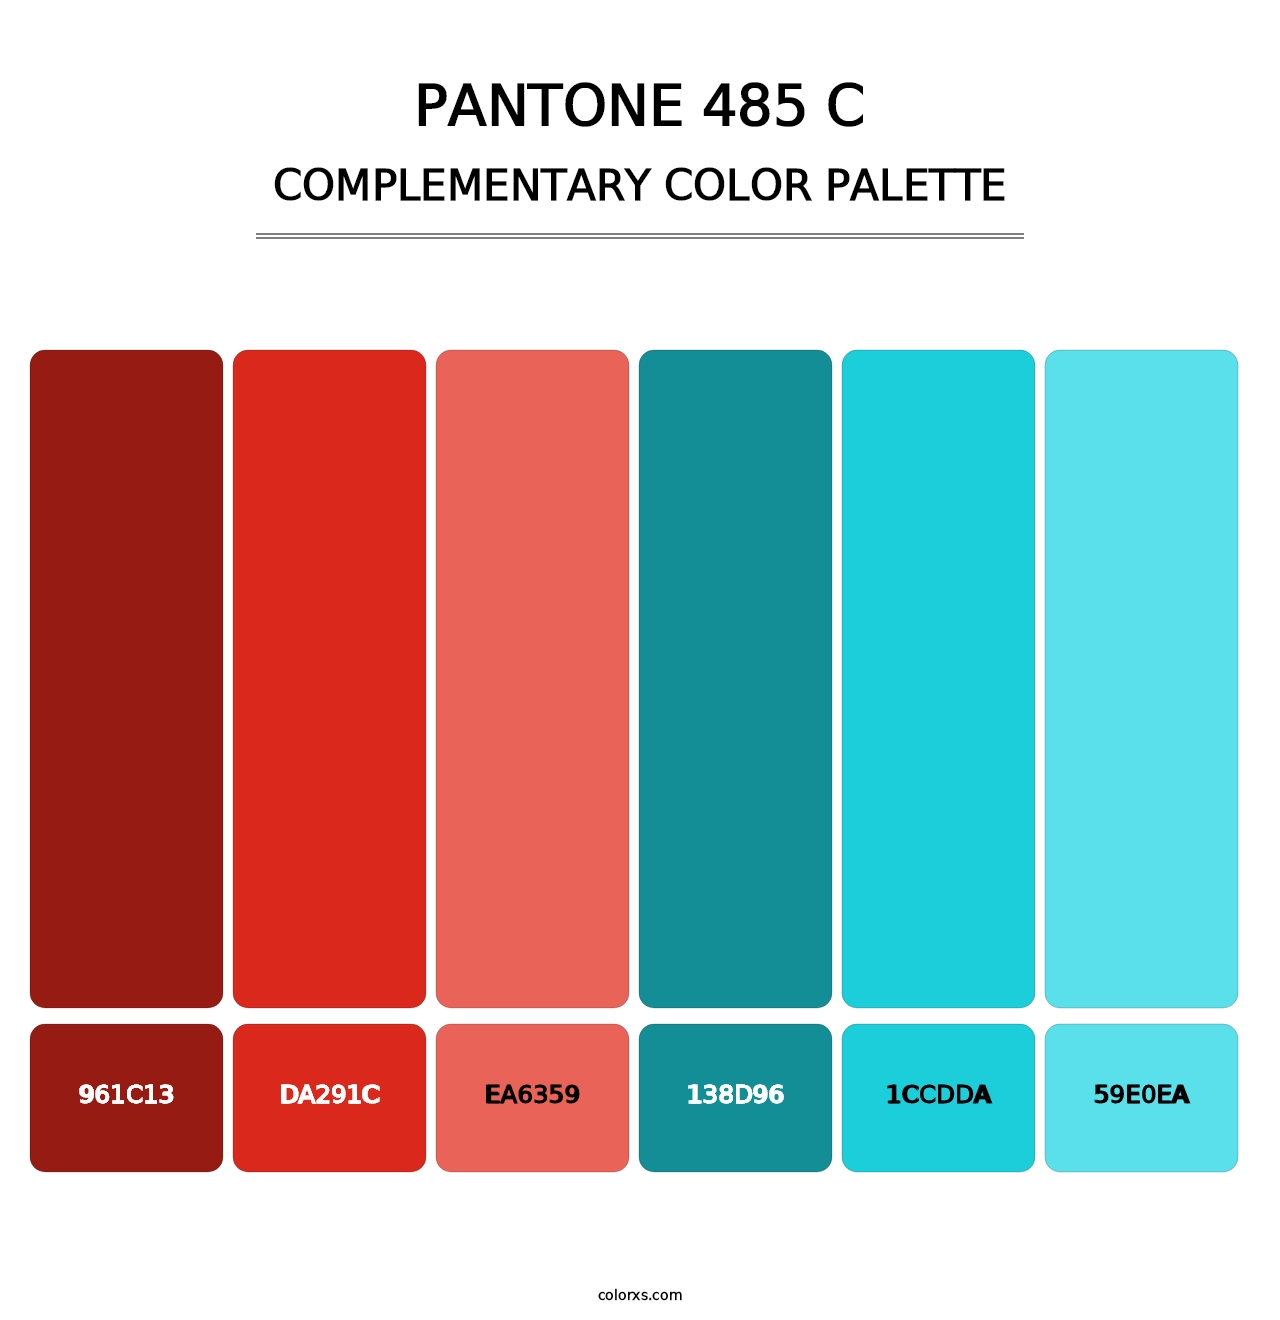 PANTONE 485 C - Complementary Color Palette